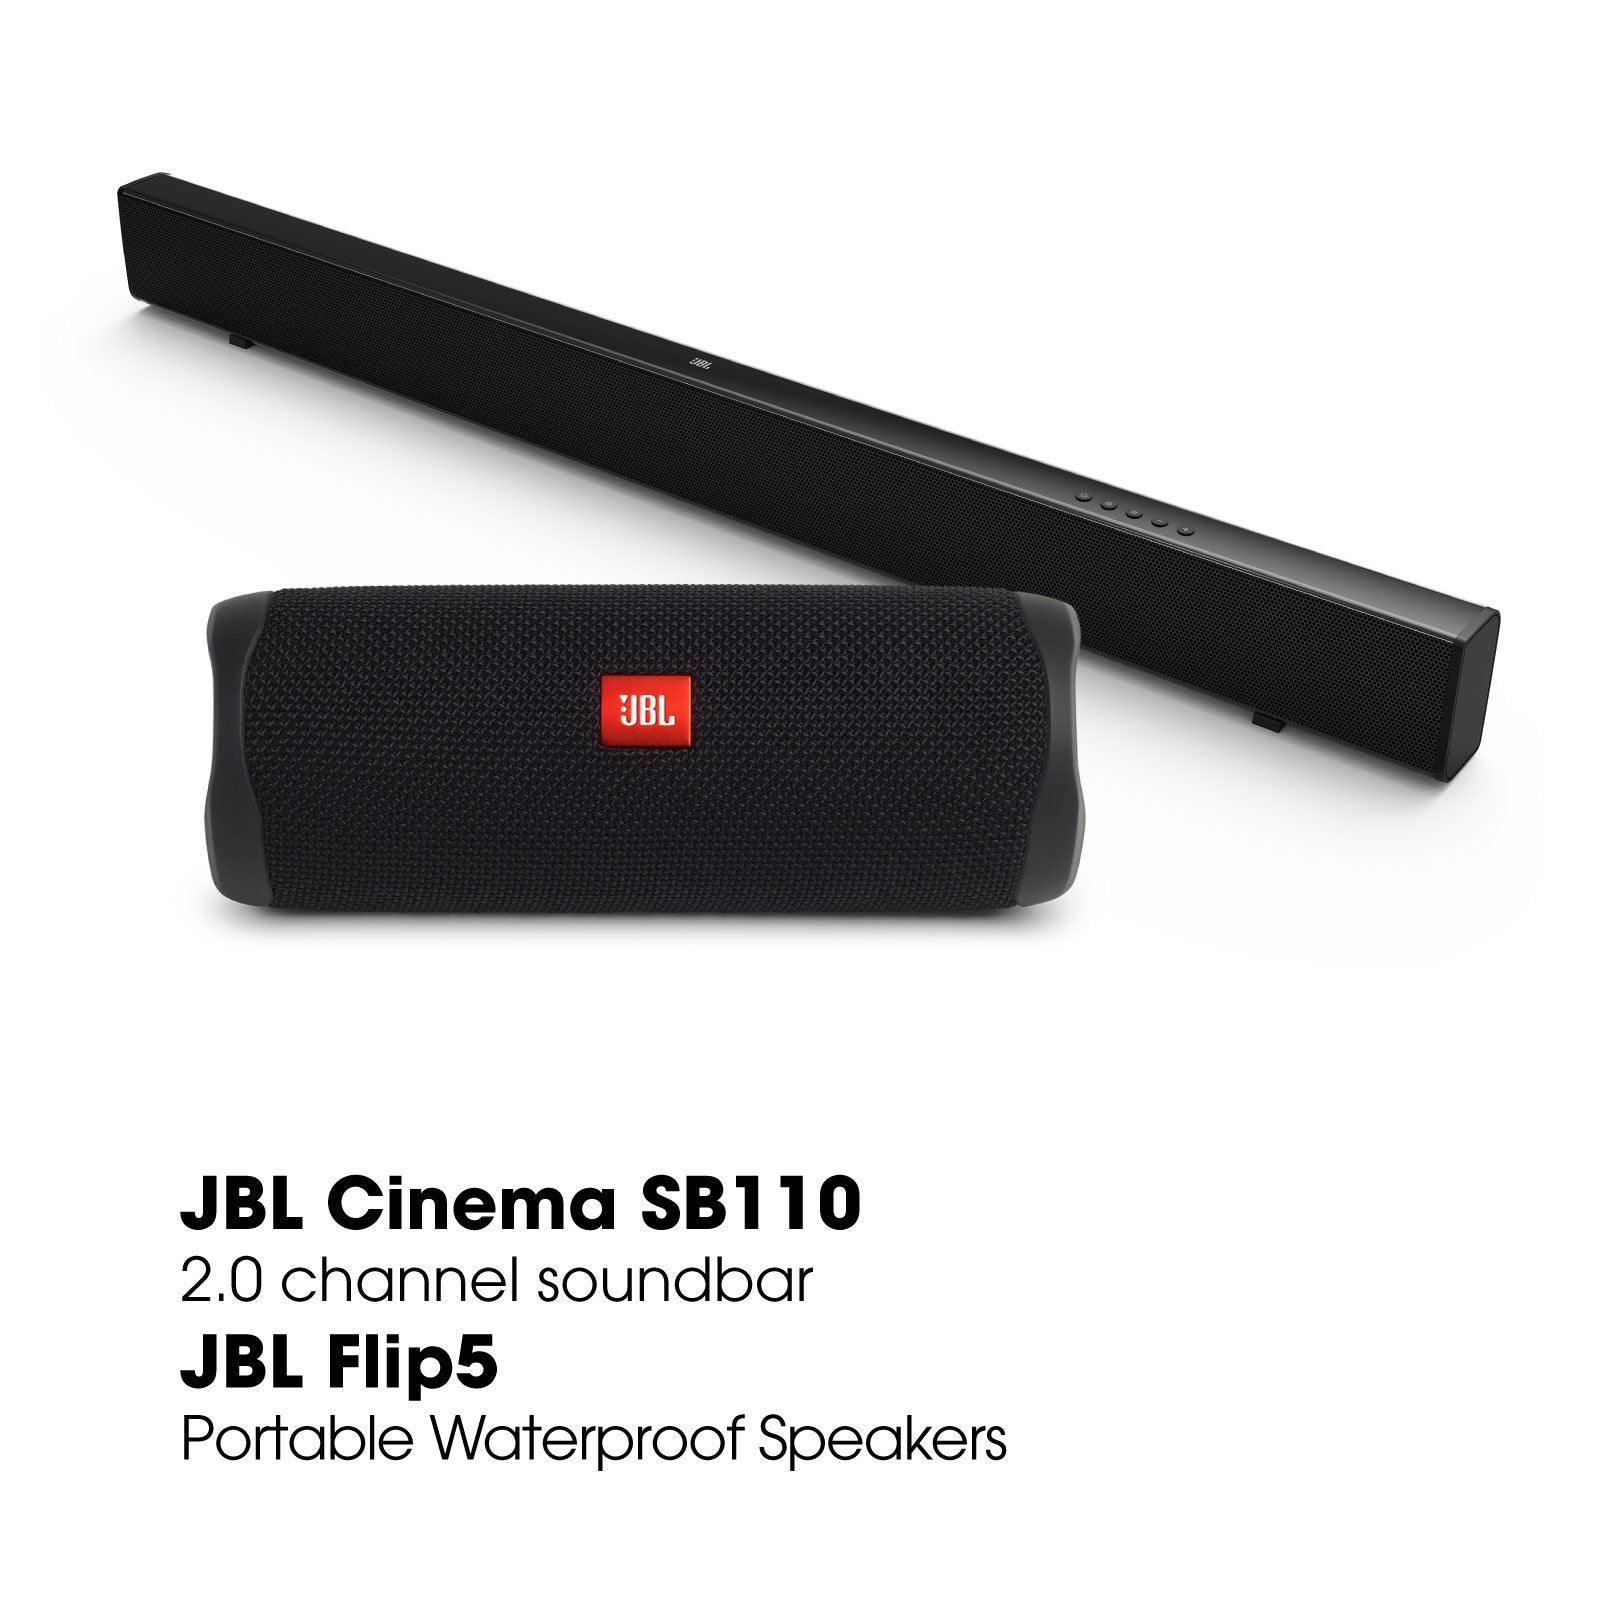 JBL Cinema SB 110 | JBL Flip 5